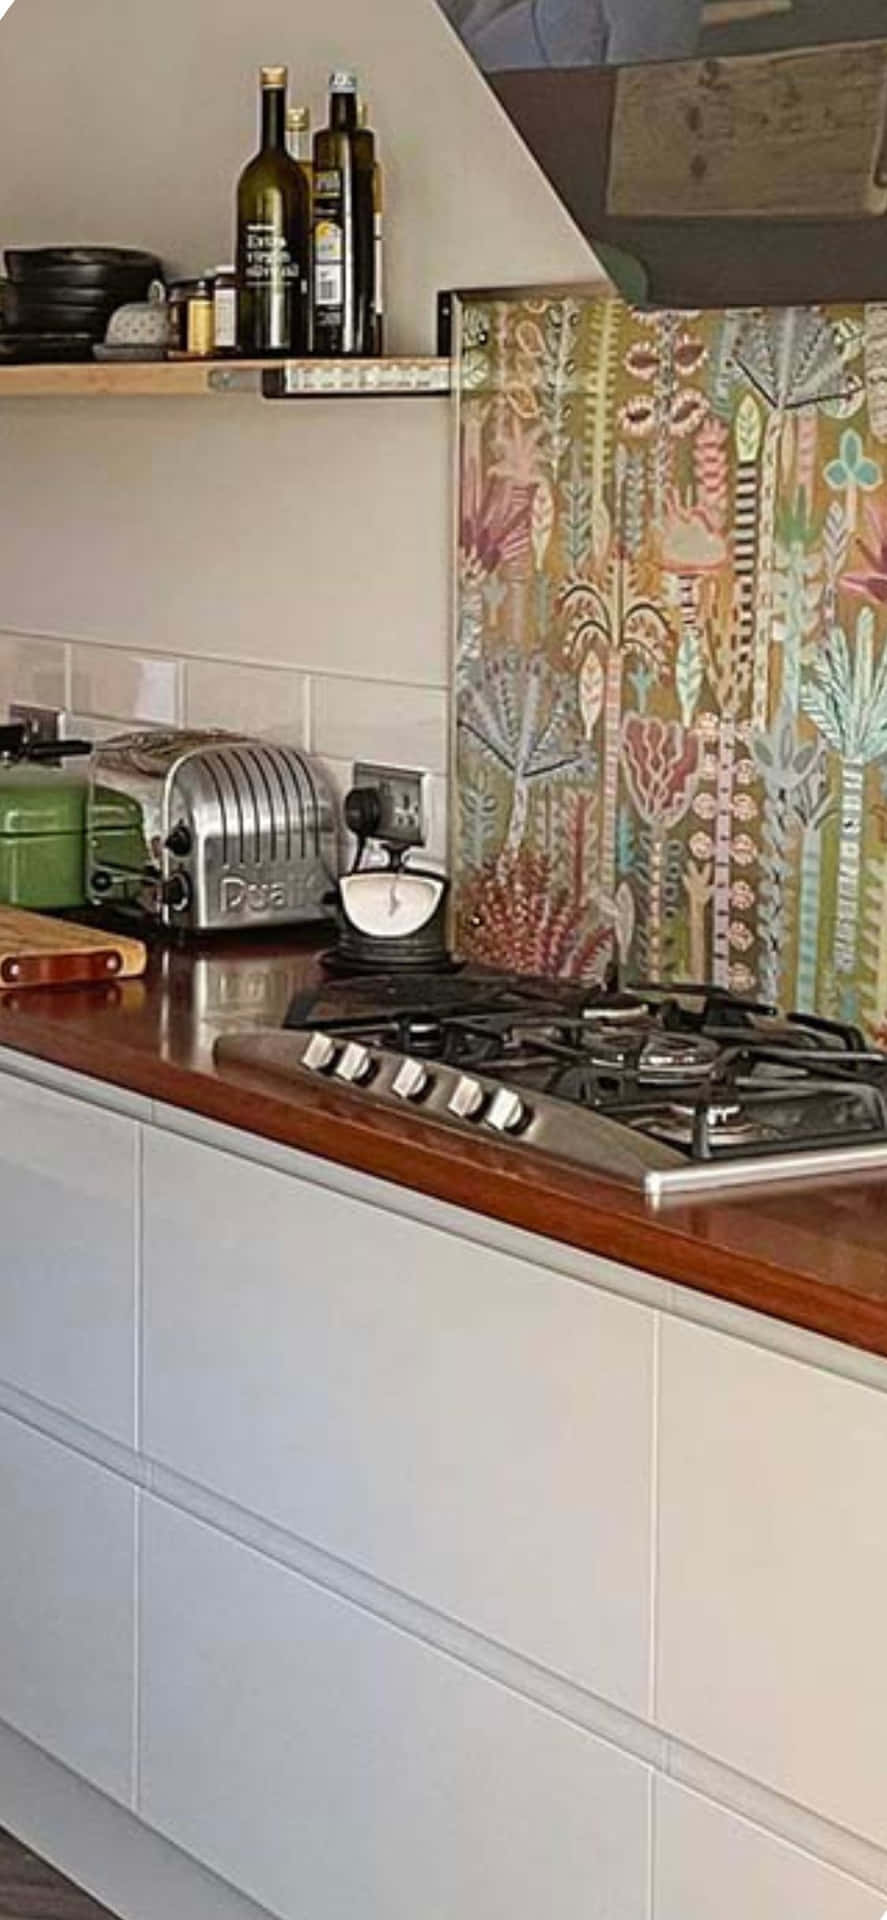 Metal Toaster Iphone X Kitchen Background